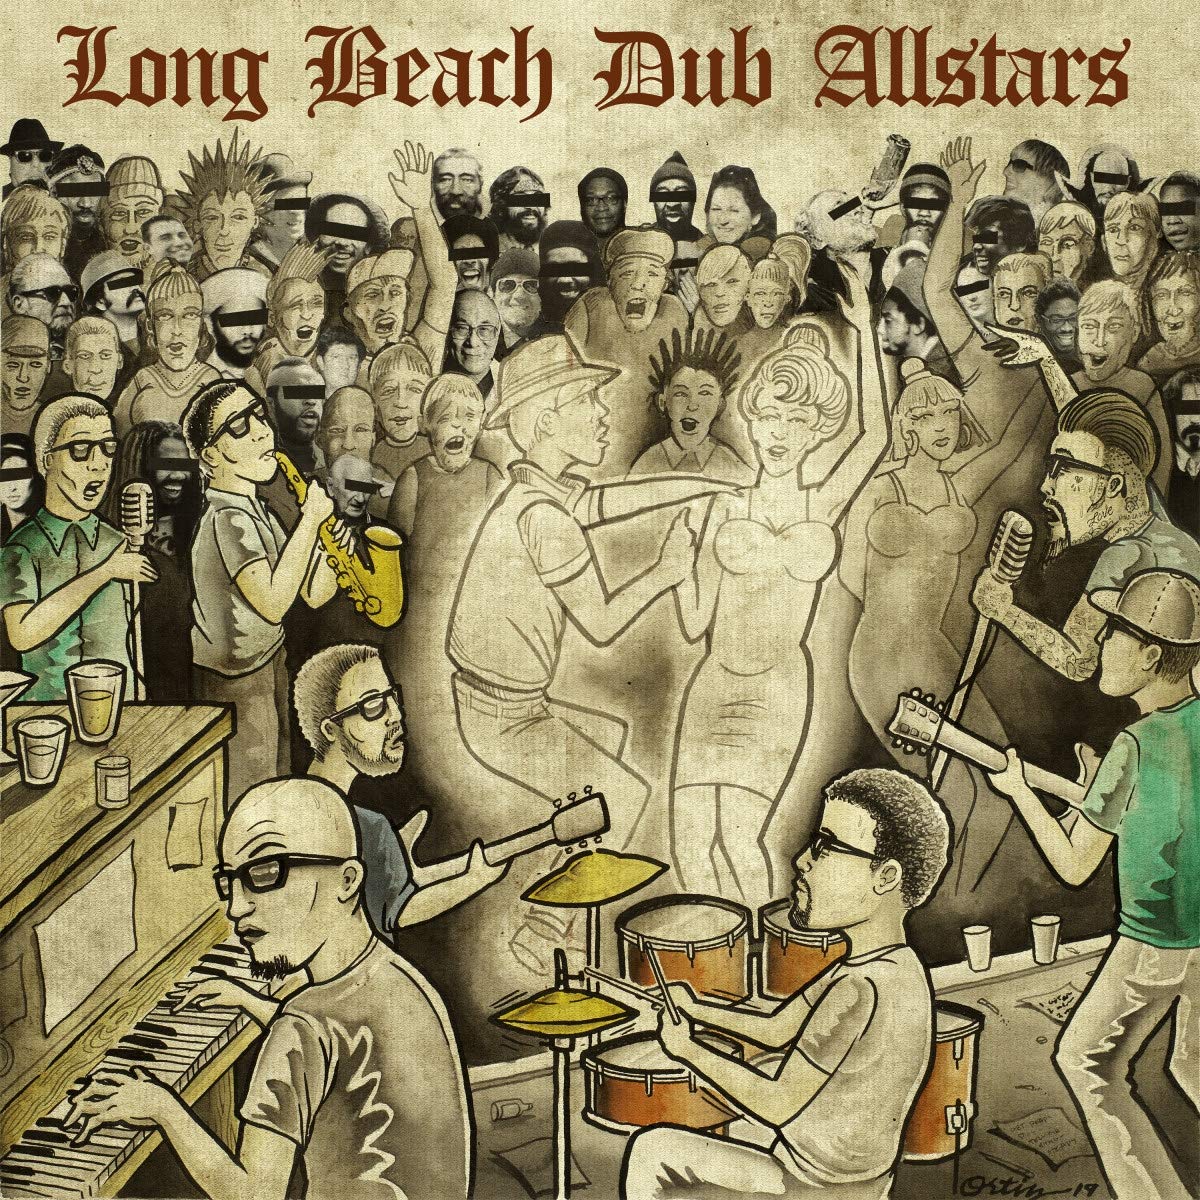 LONG BEACH DUB ALL STARS - S/T (2020) Vinyl LP